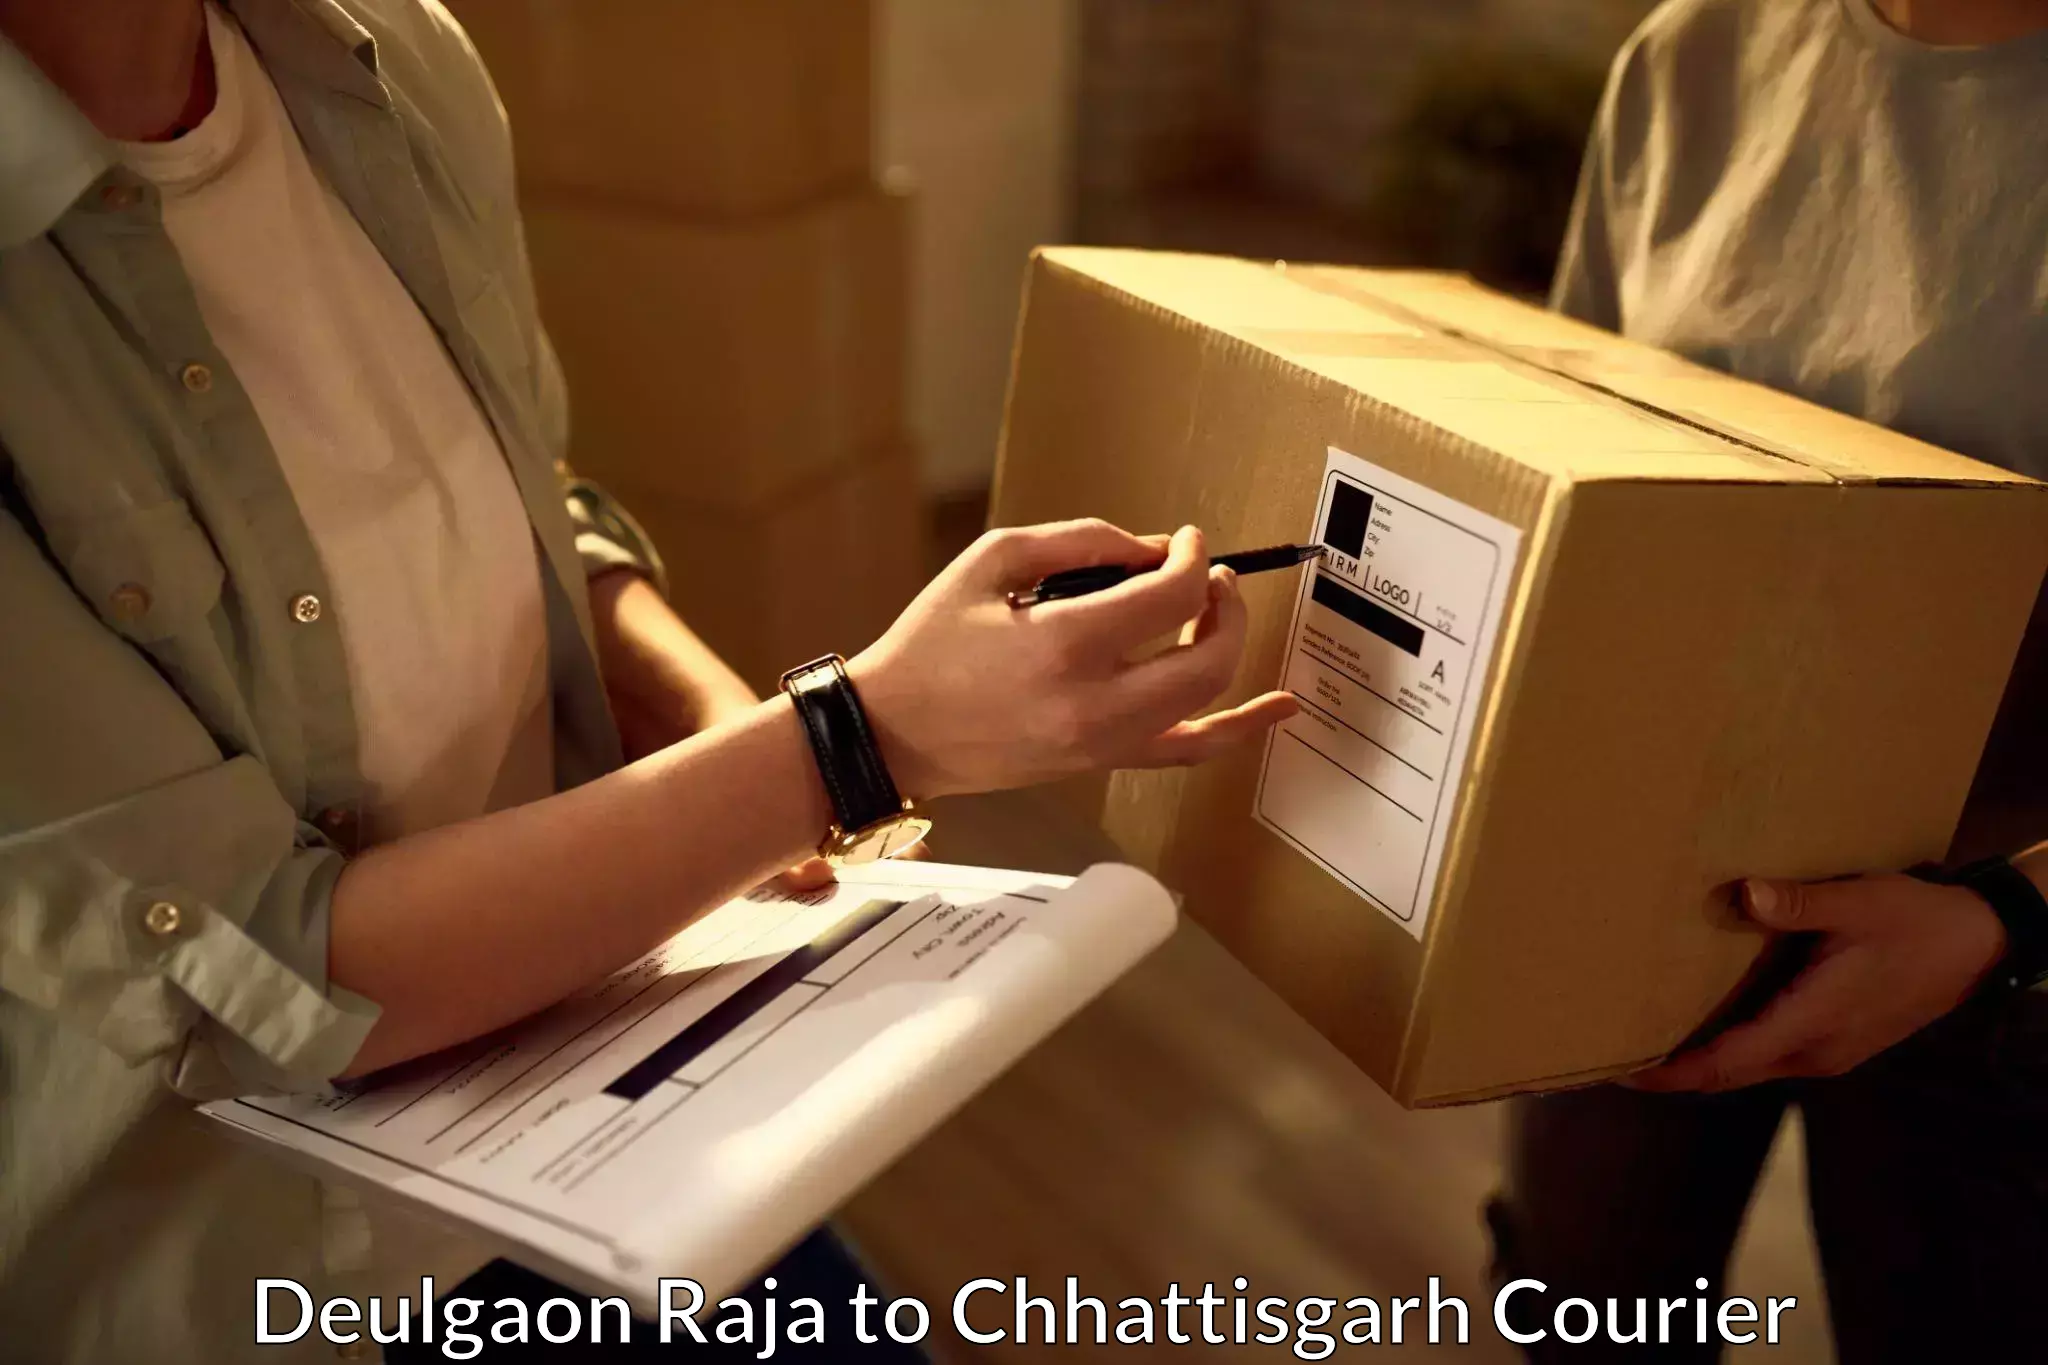 International courier rates Deulgaon Raja to Patna Chhattisgarh